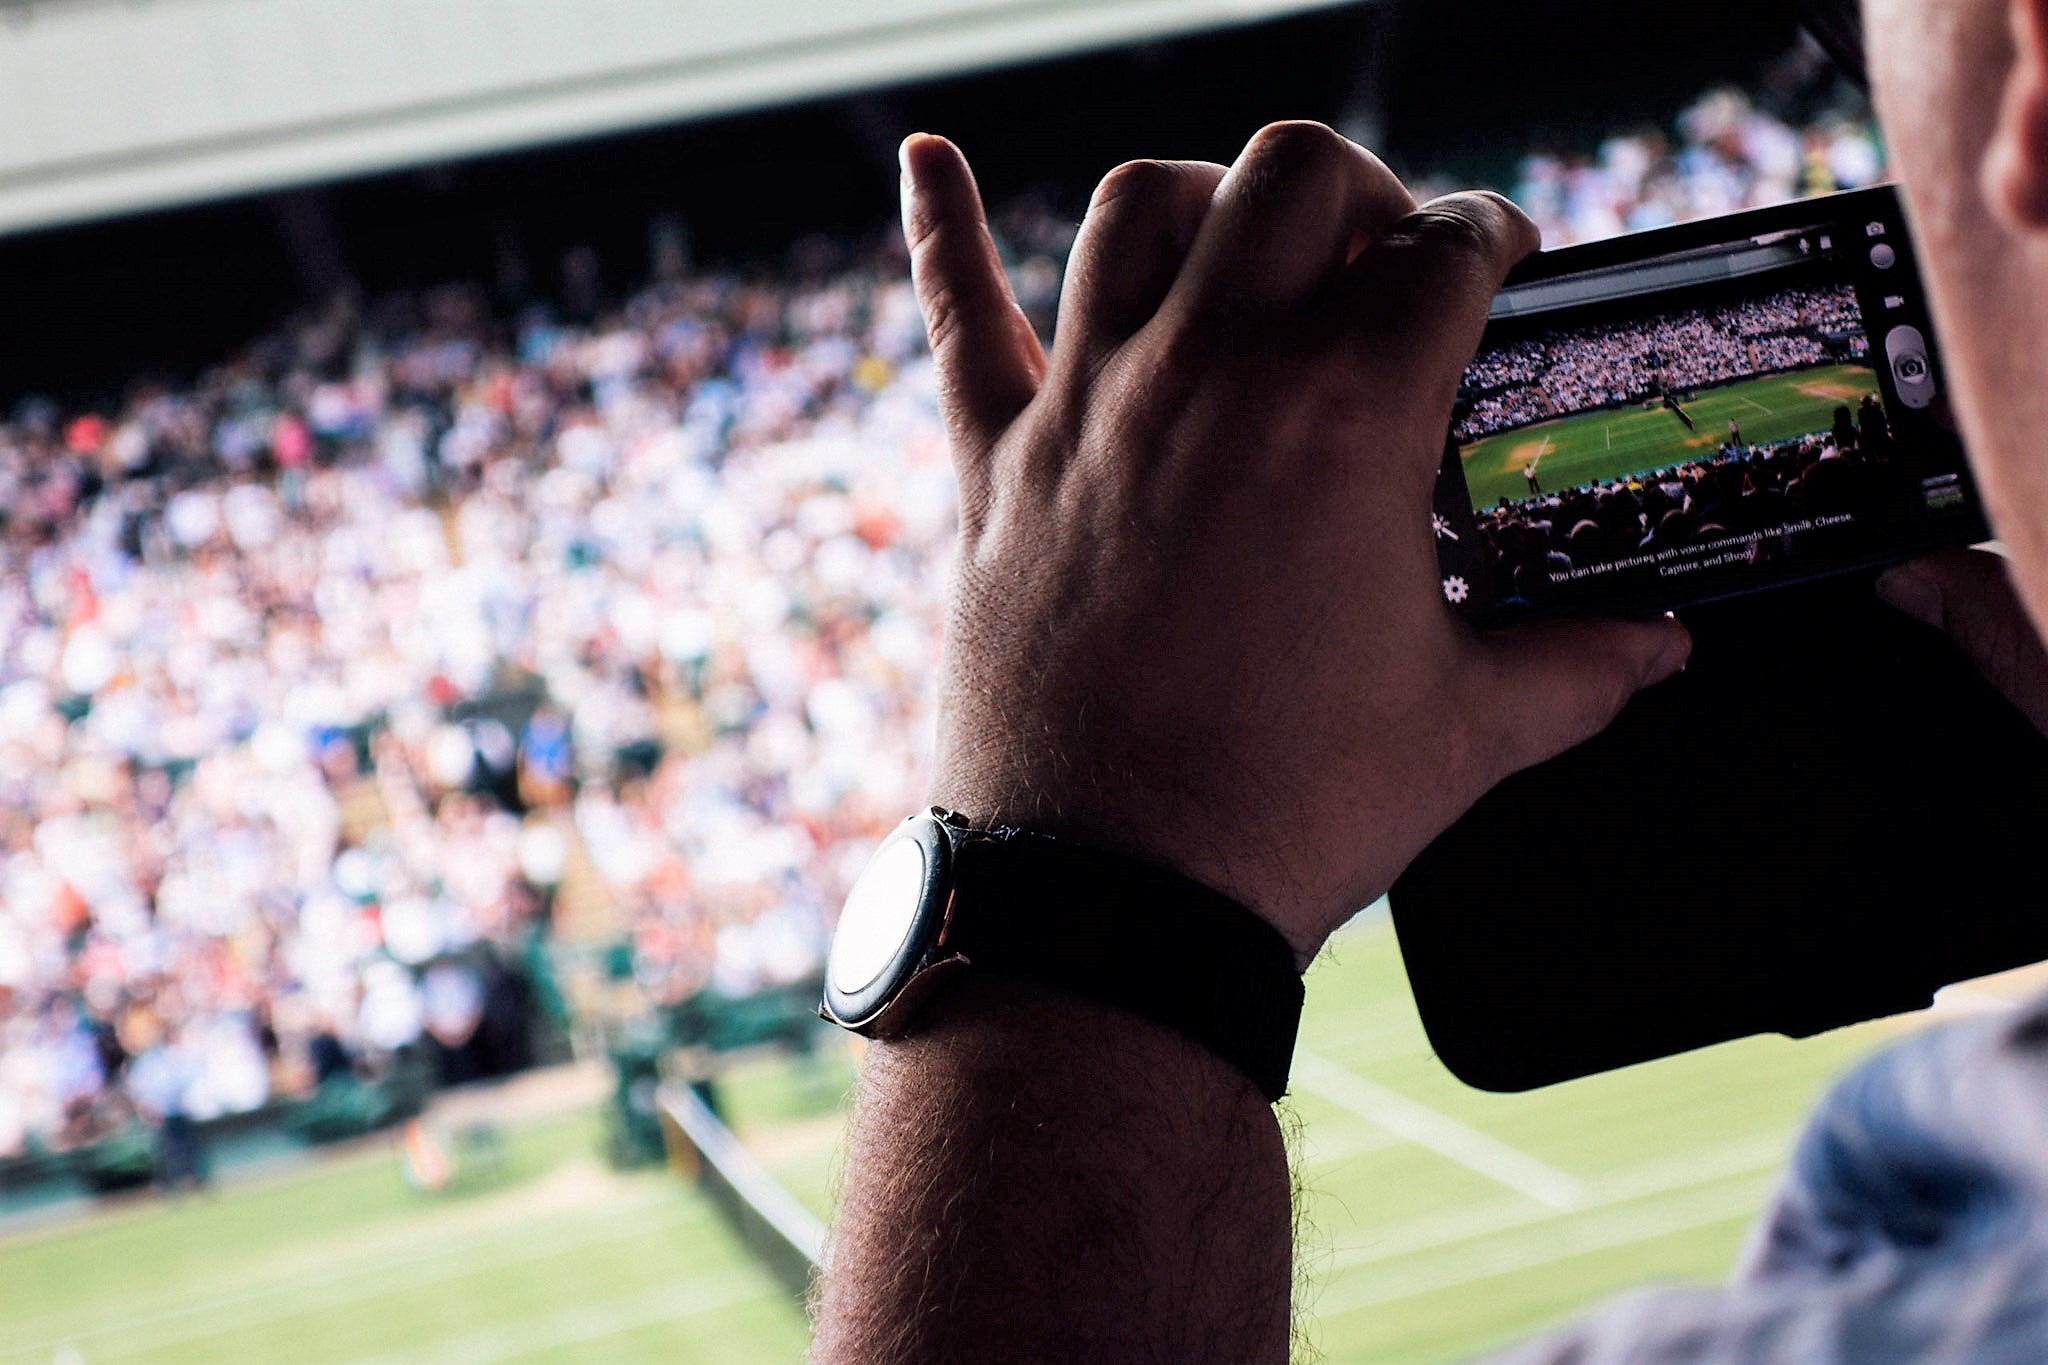 Tennis spectator recording an image